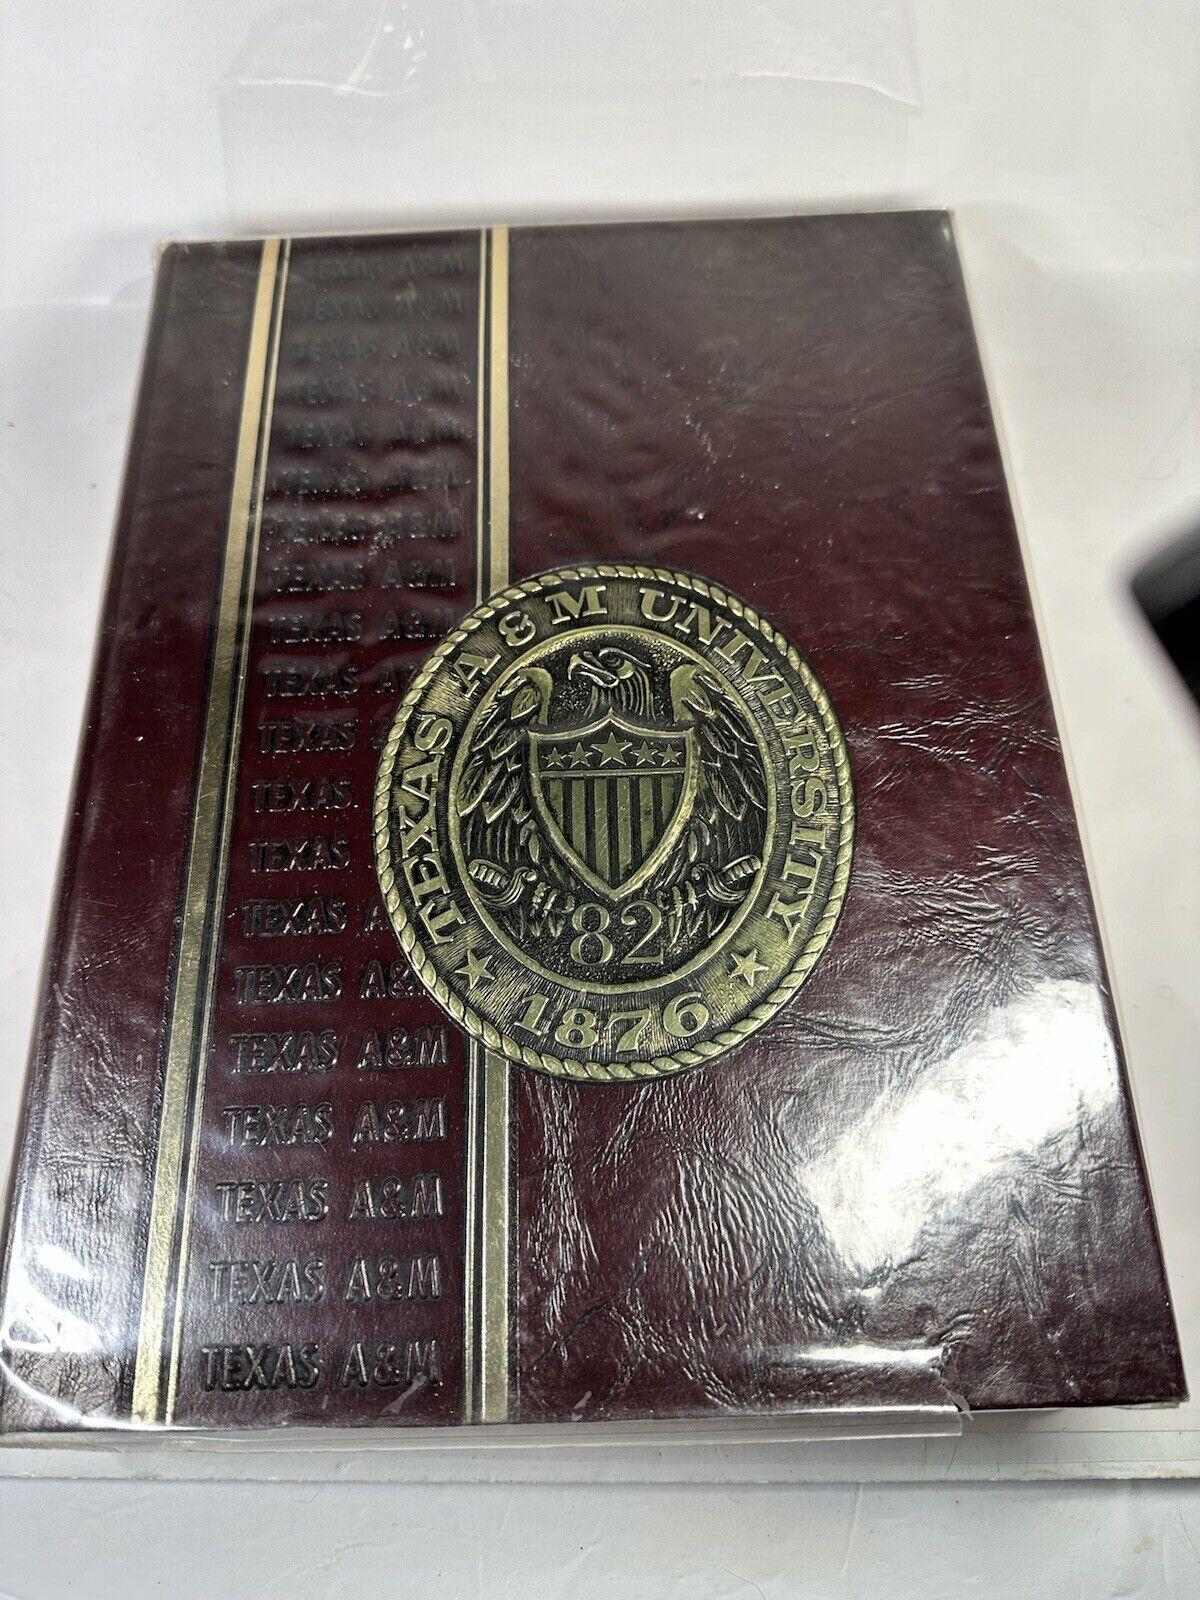 Aggieland College Station 1982 Texas A&M 1876 Year Book